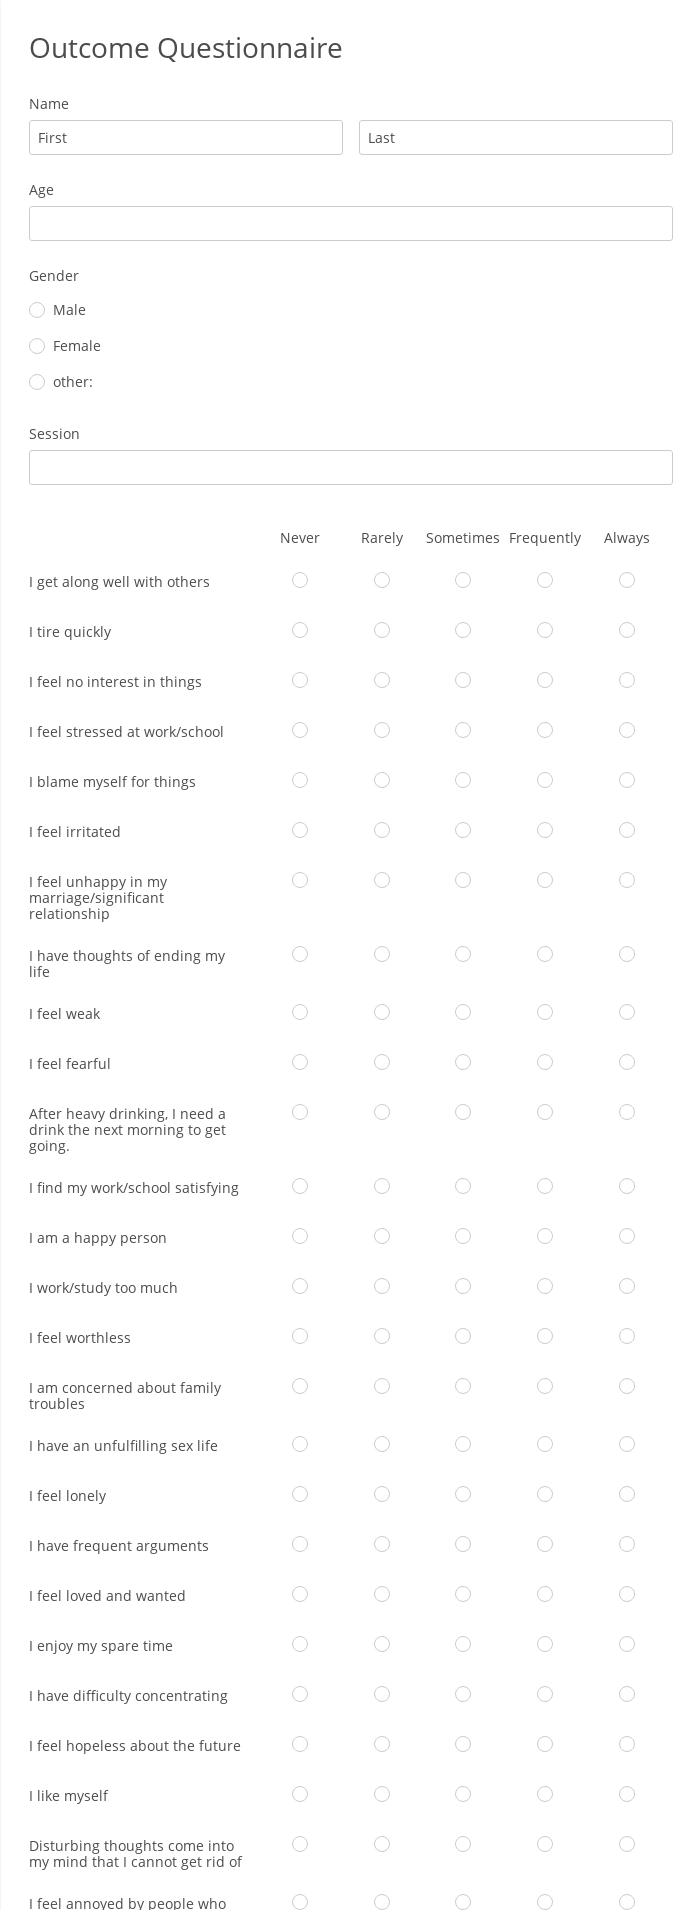 Outcome Questionnaire